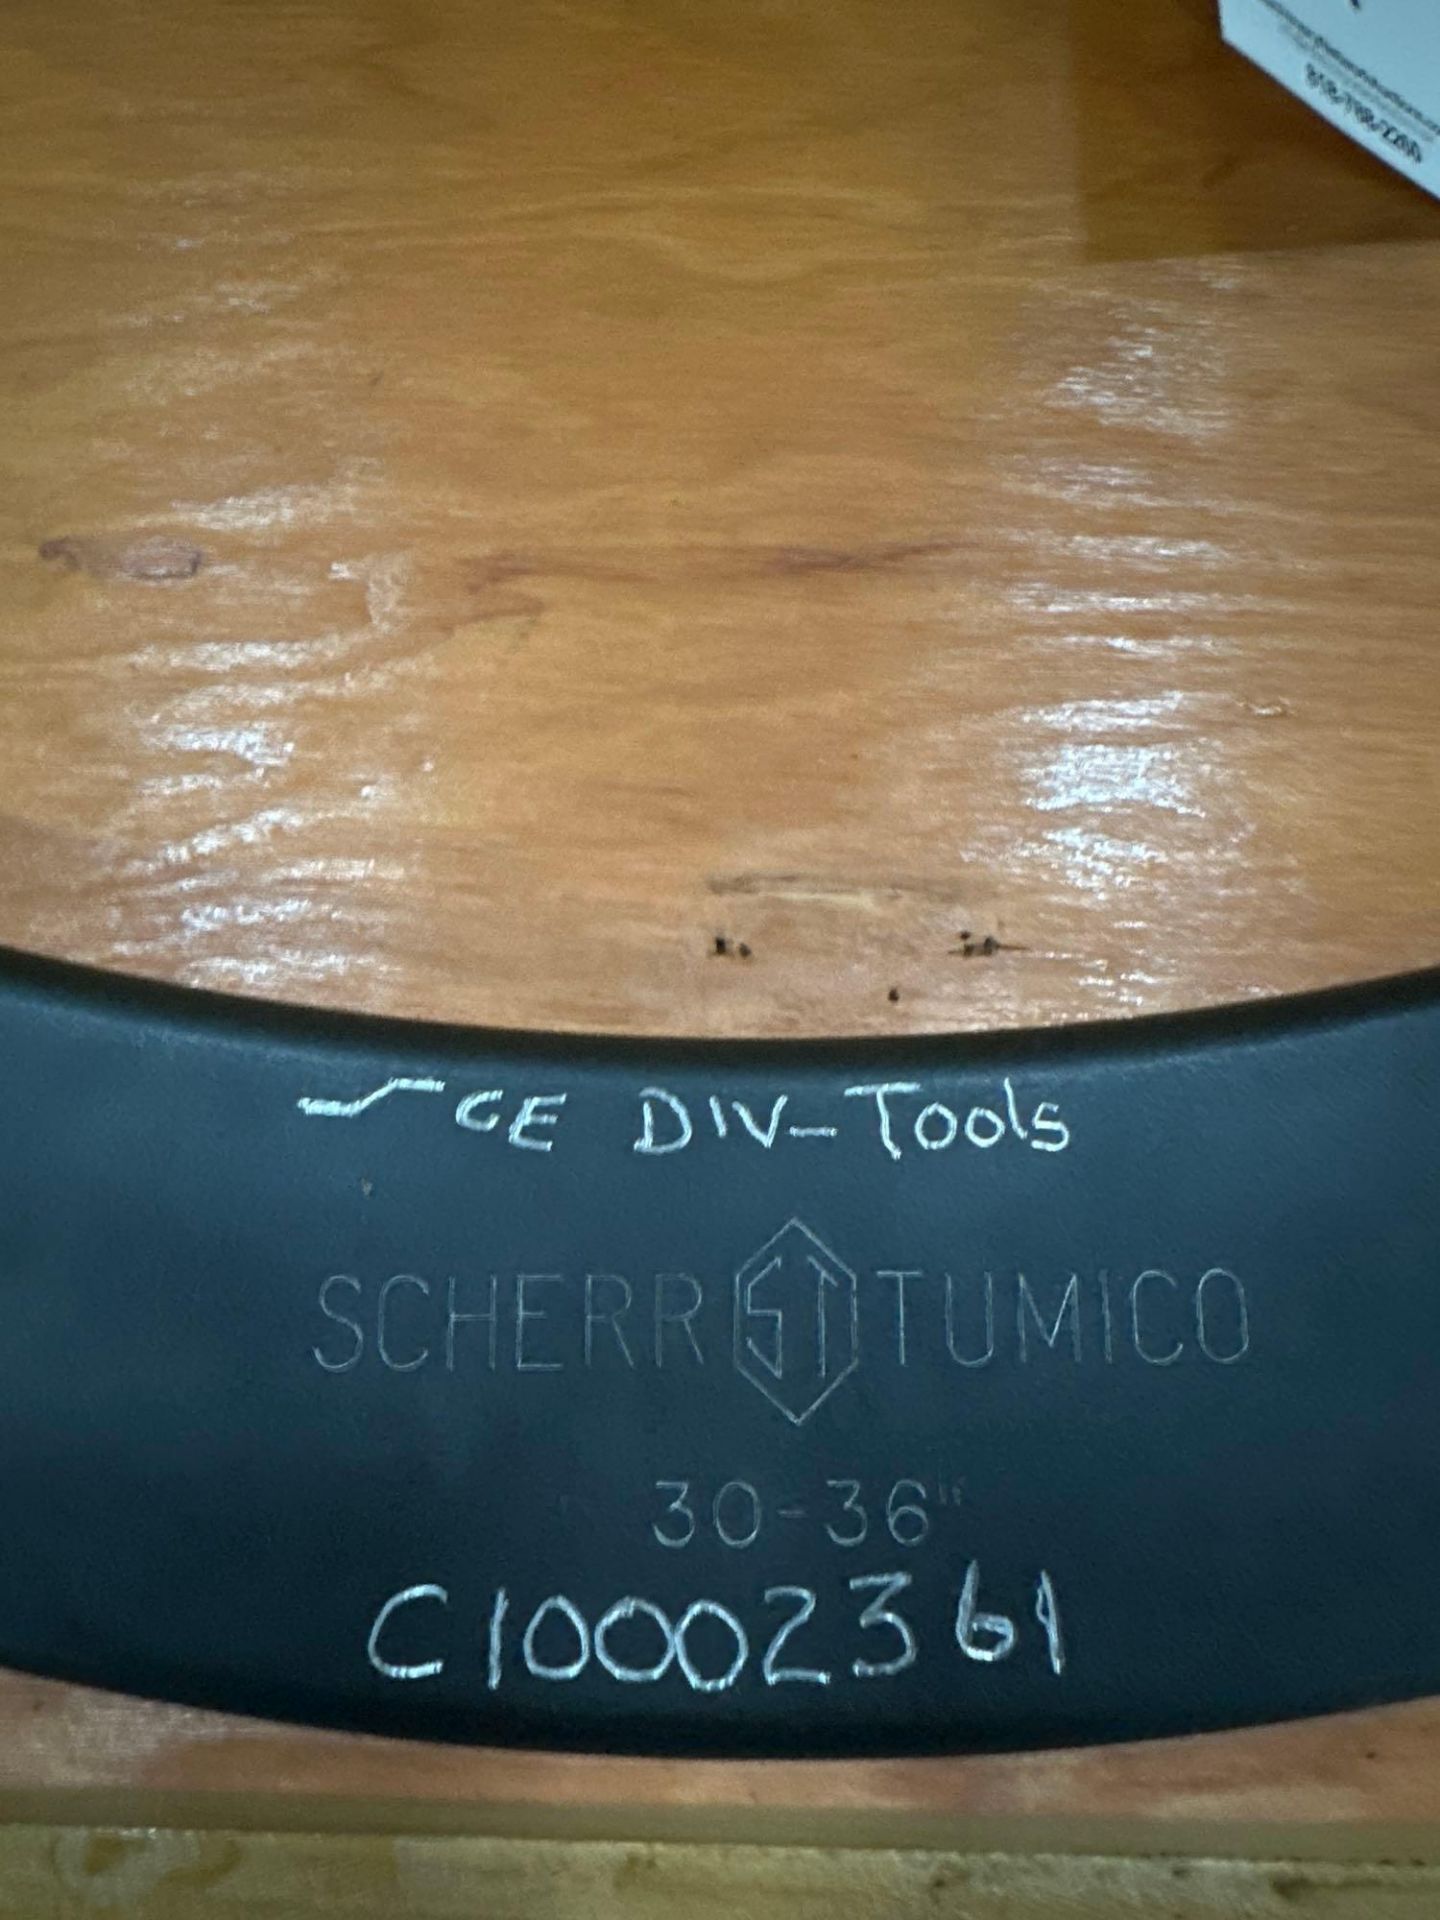 30”-36” Scherr Tumico Outside Micrometer - Image 2 of 4